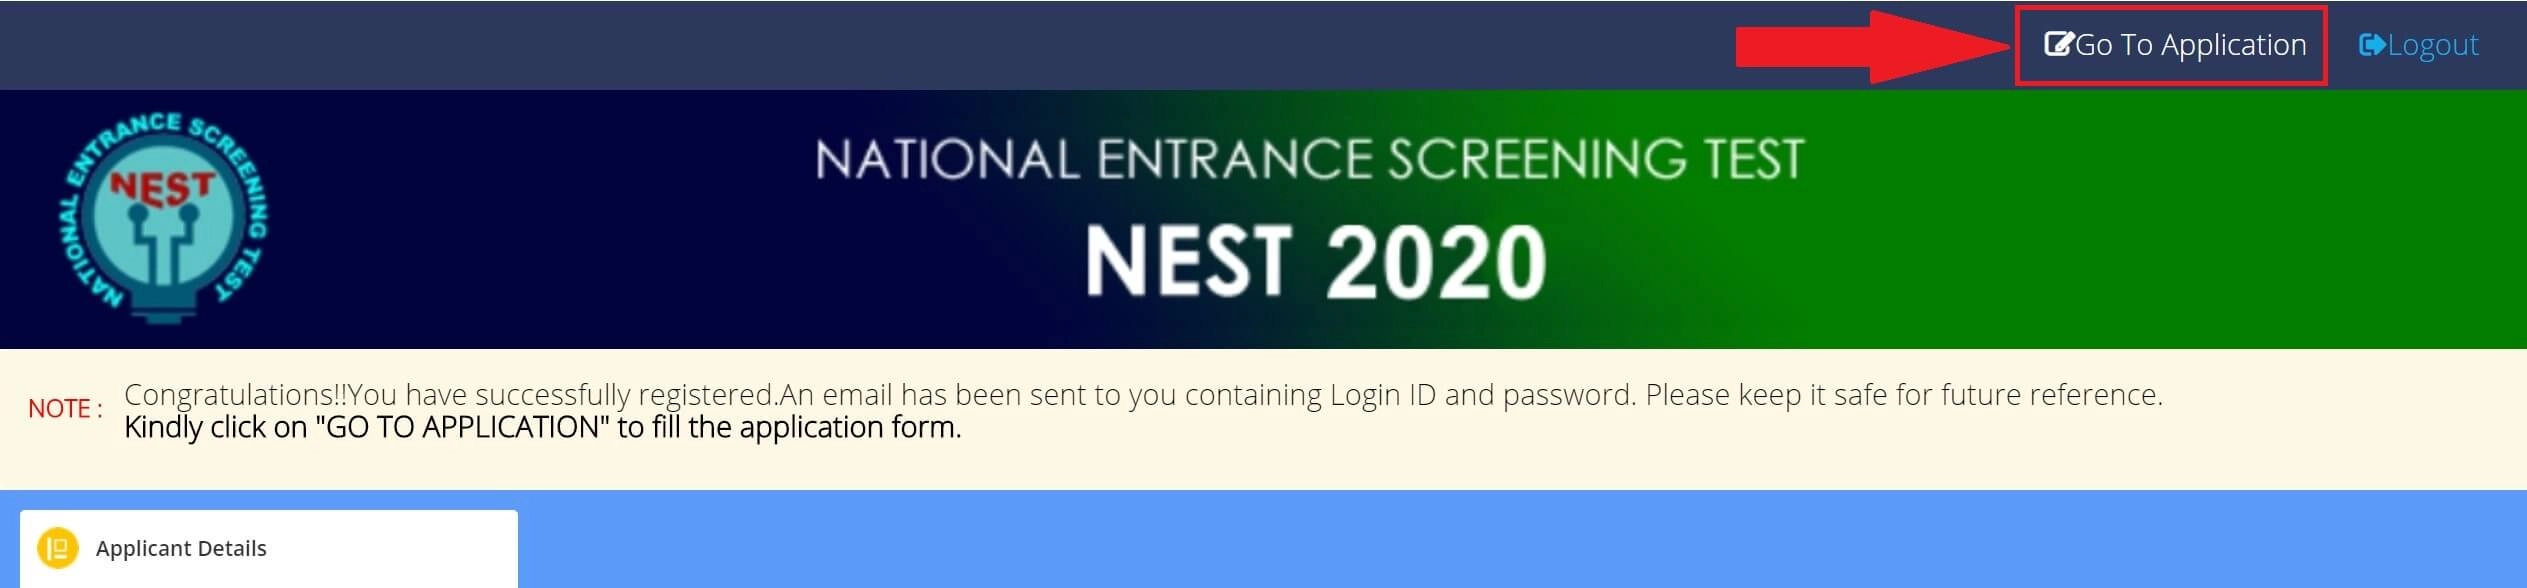 NEST_App_2020_7